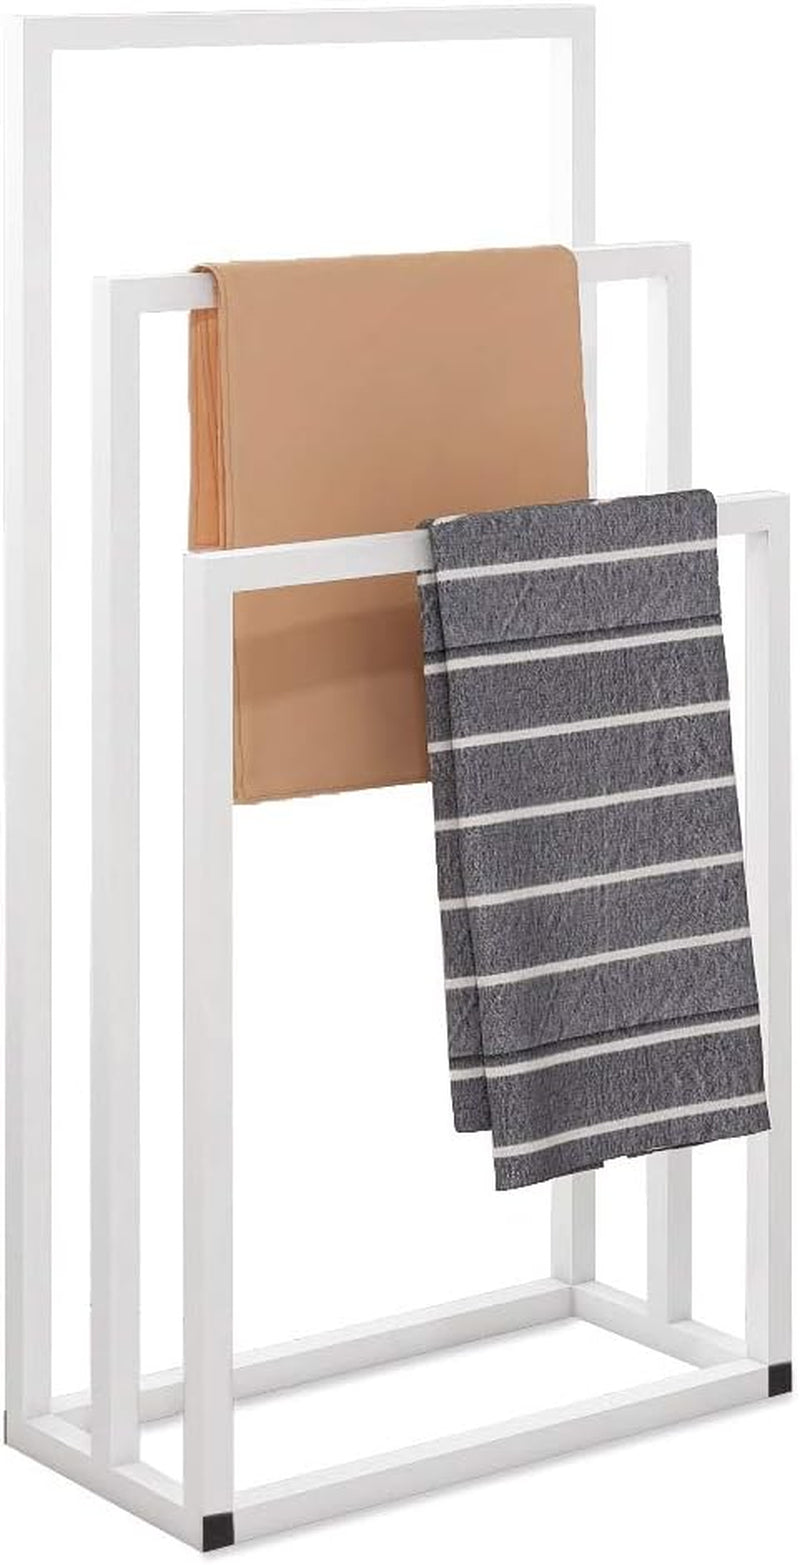  Freestanding Towel Racks for Bathroom 3 Bars 